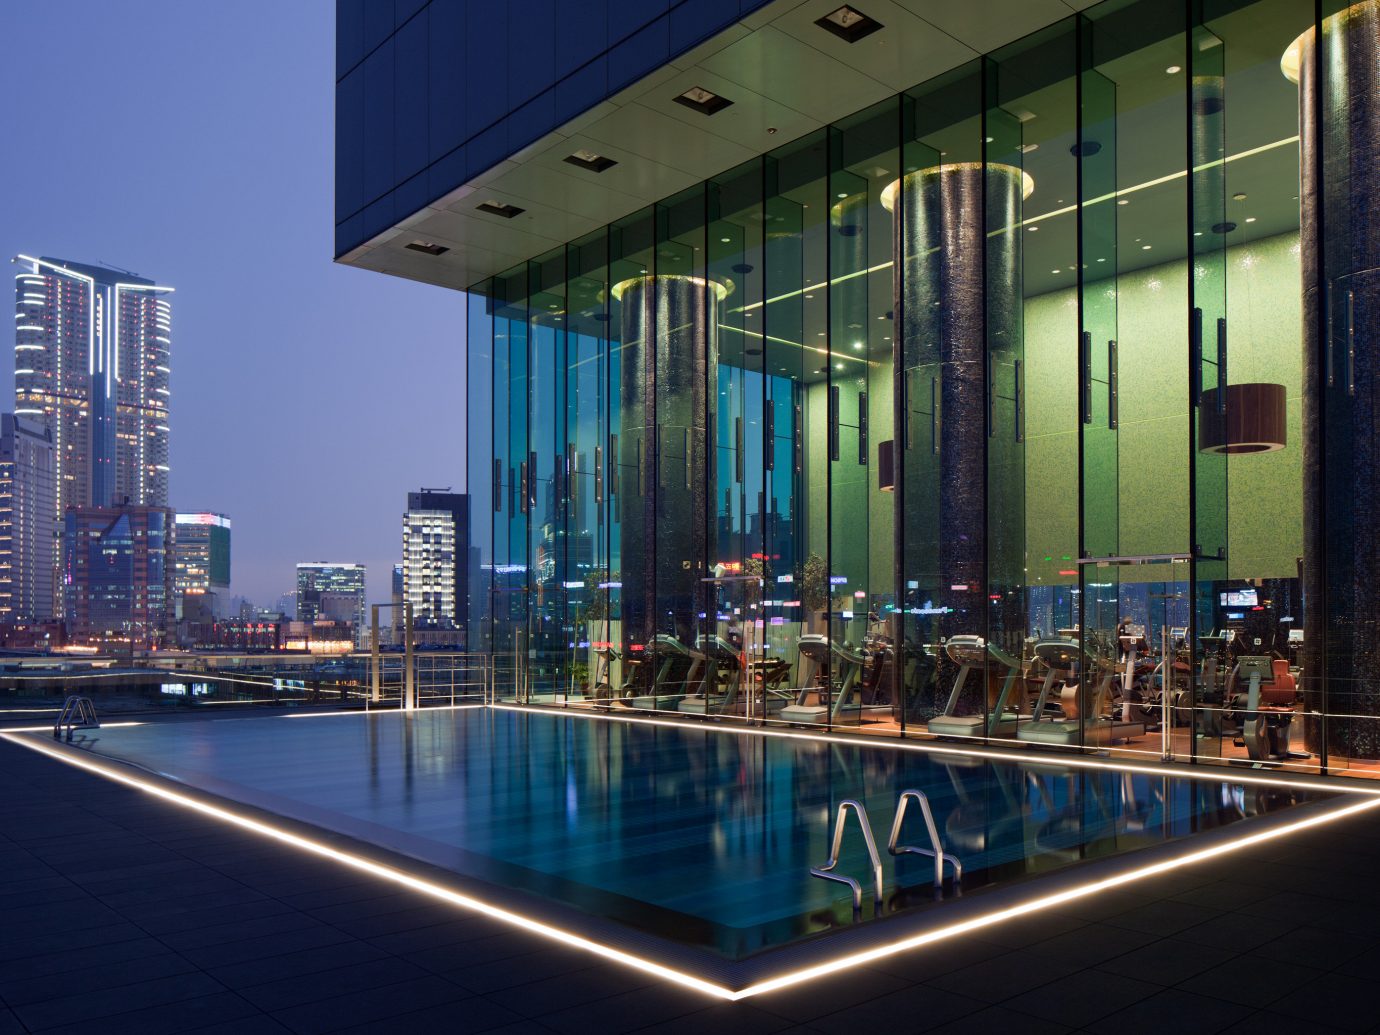 Hotels building outdoor Architecture night condominium lighting convention center reflection headquarters City skyscraper